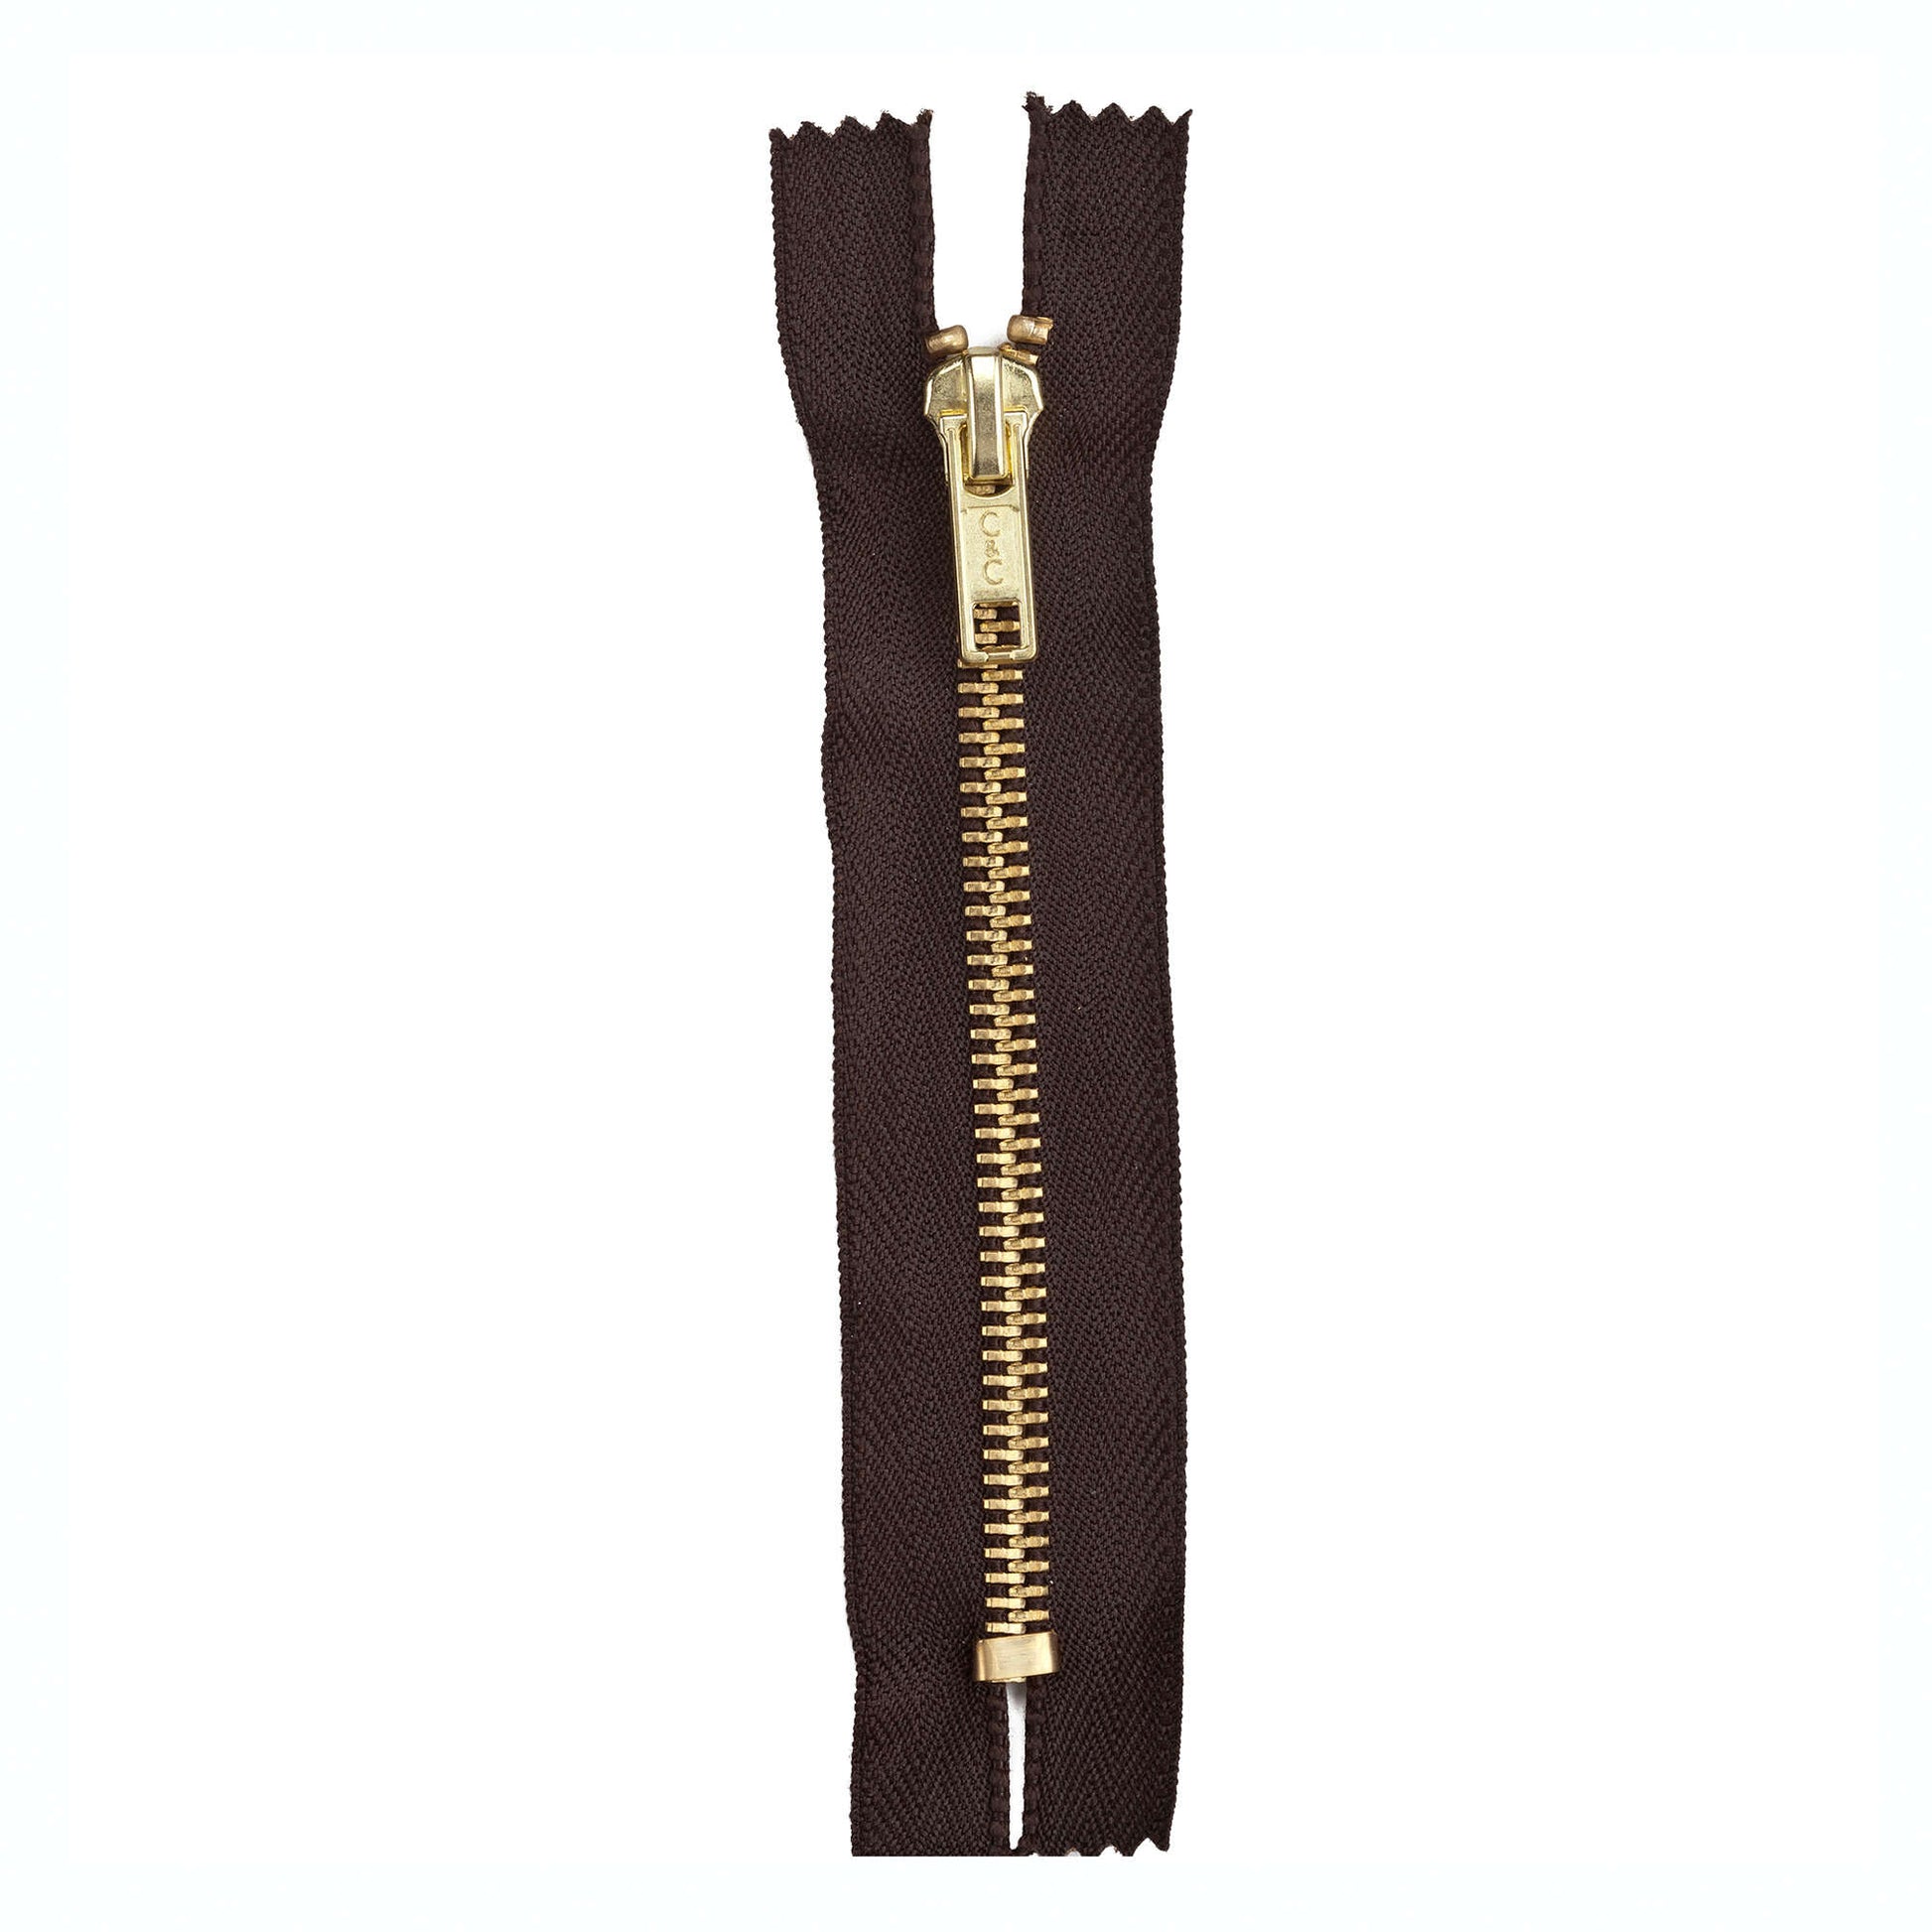 Coats & Clark Fashion Metal Separating Brass Zippers